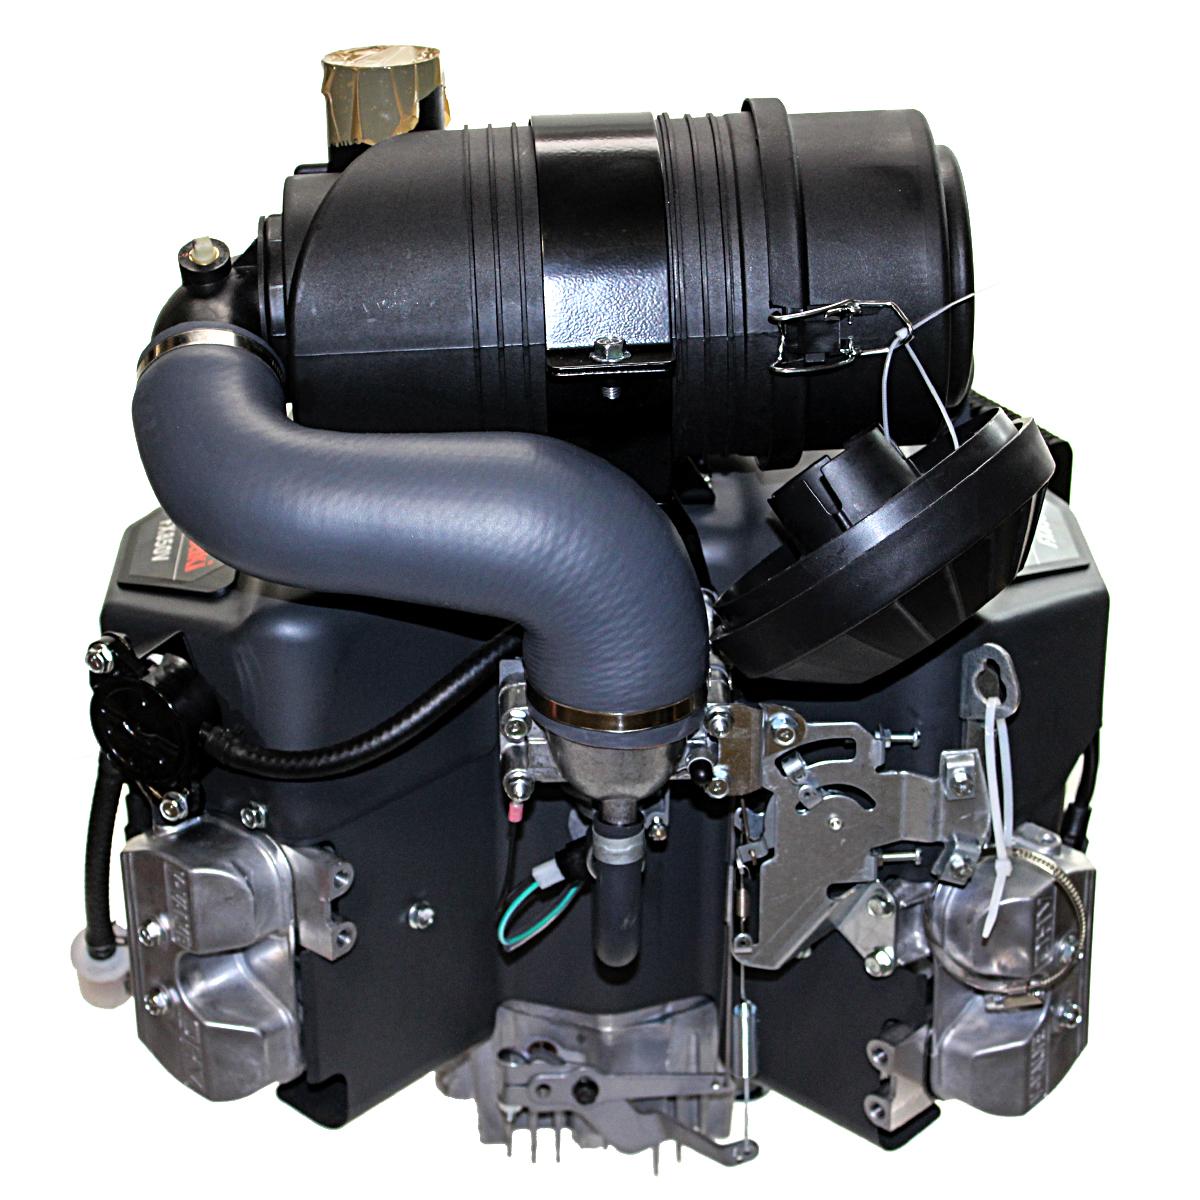 27hp Twin Cylinder Vertical 1-1/8"x4-9/32" Shaft, Electric Start, 15 Amp Alternator, Canister Air Filter, Kawasaki Engine